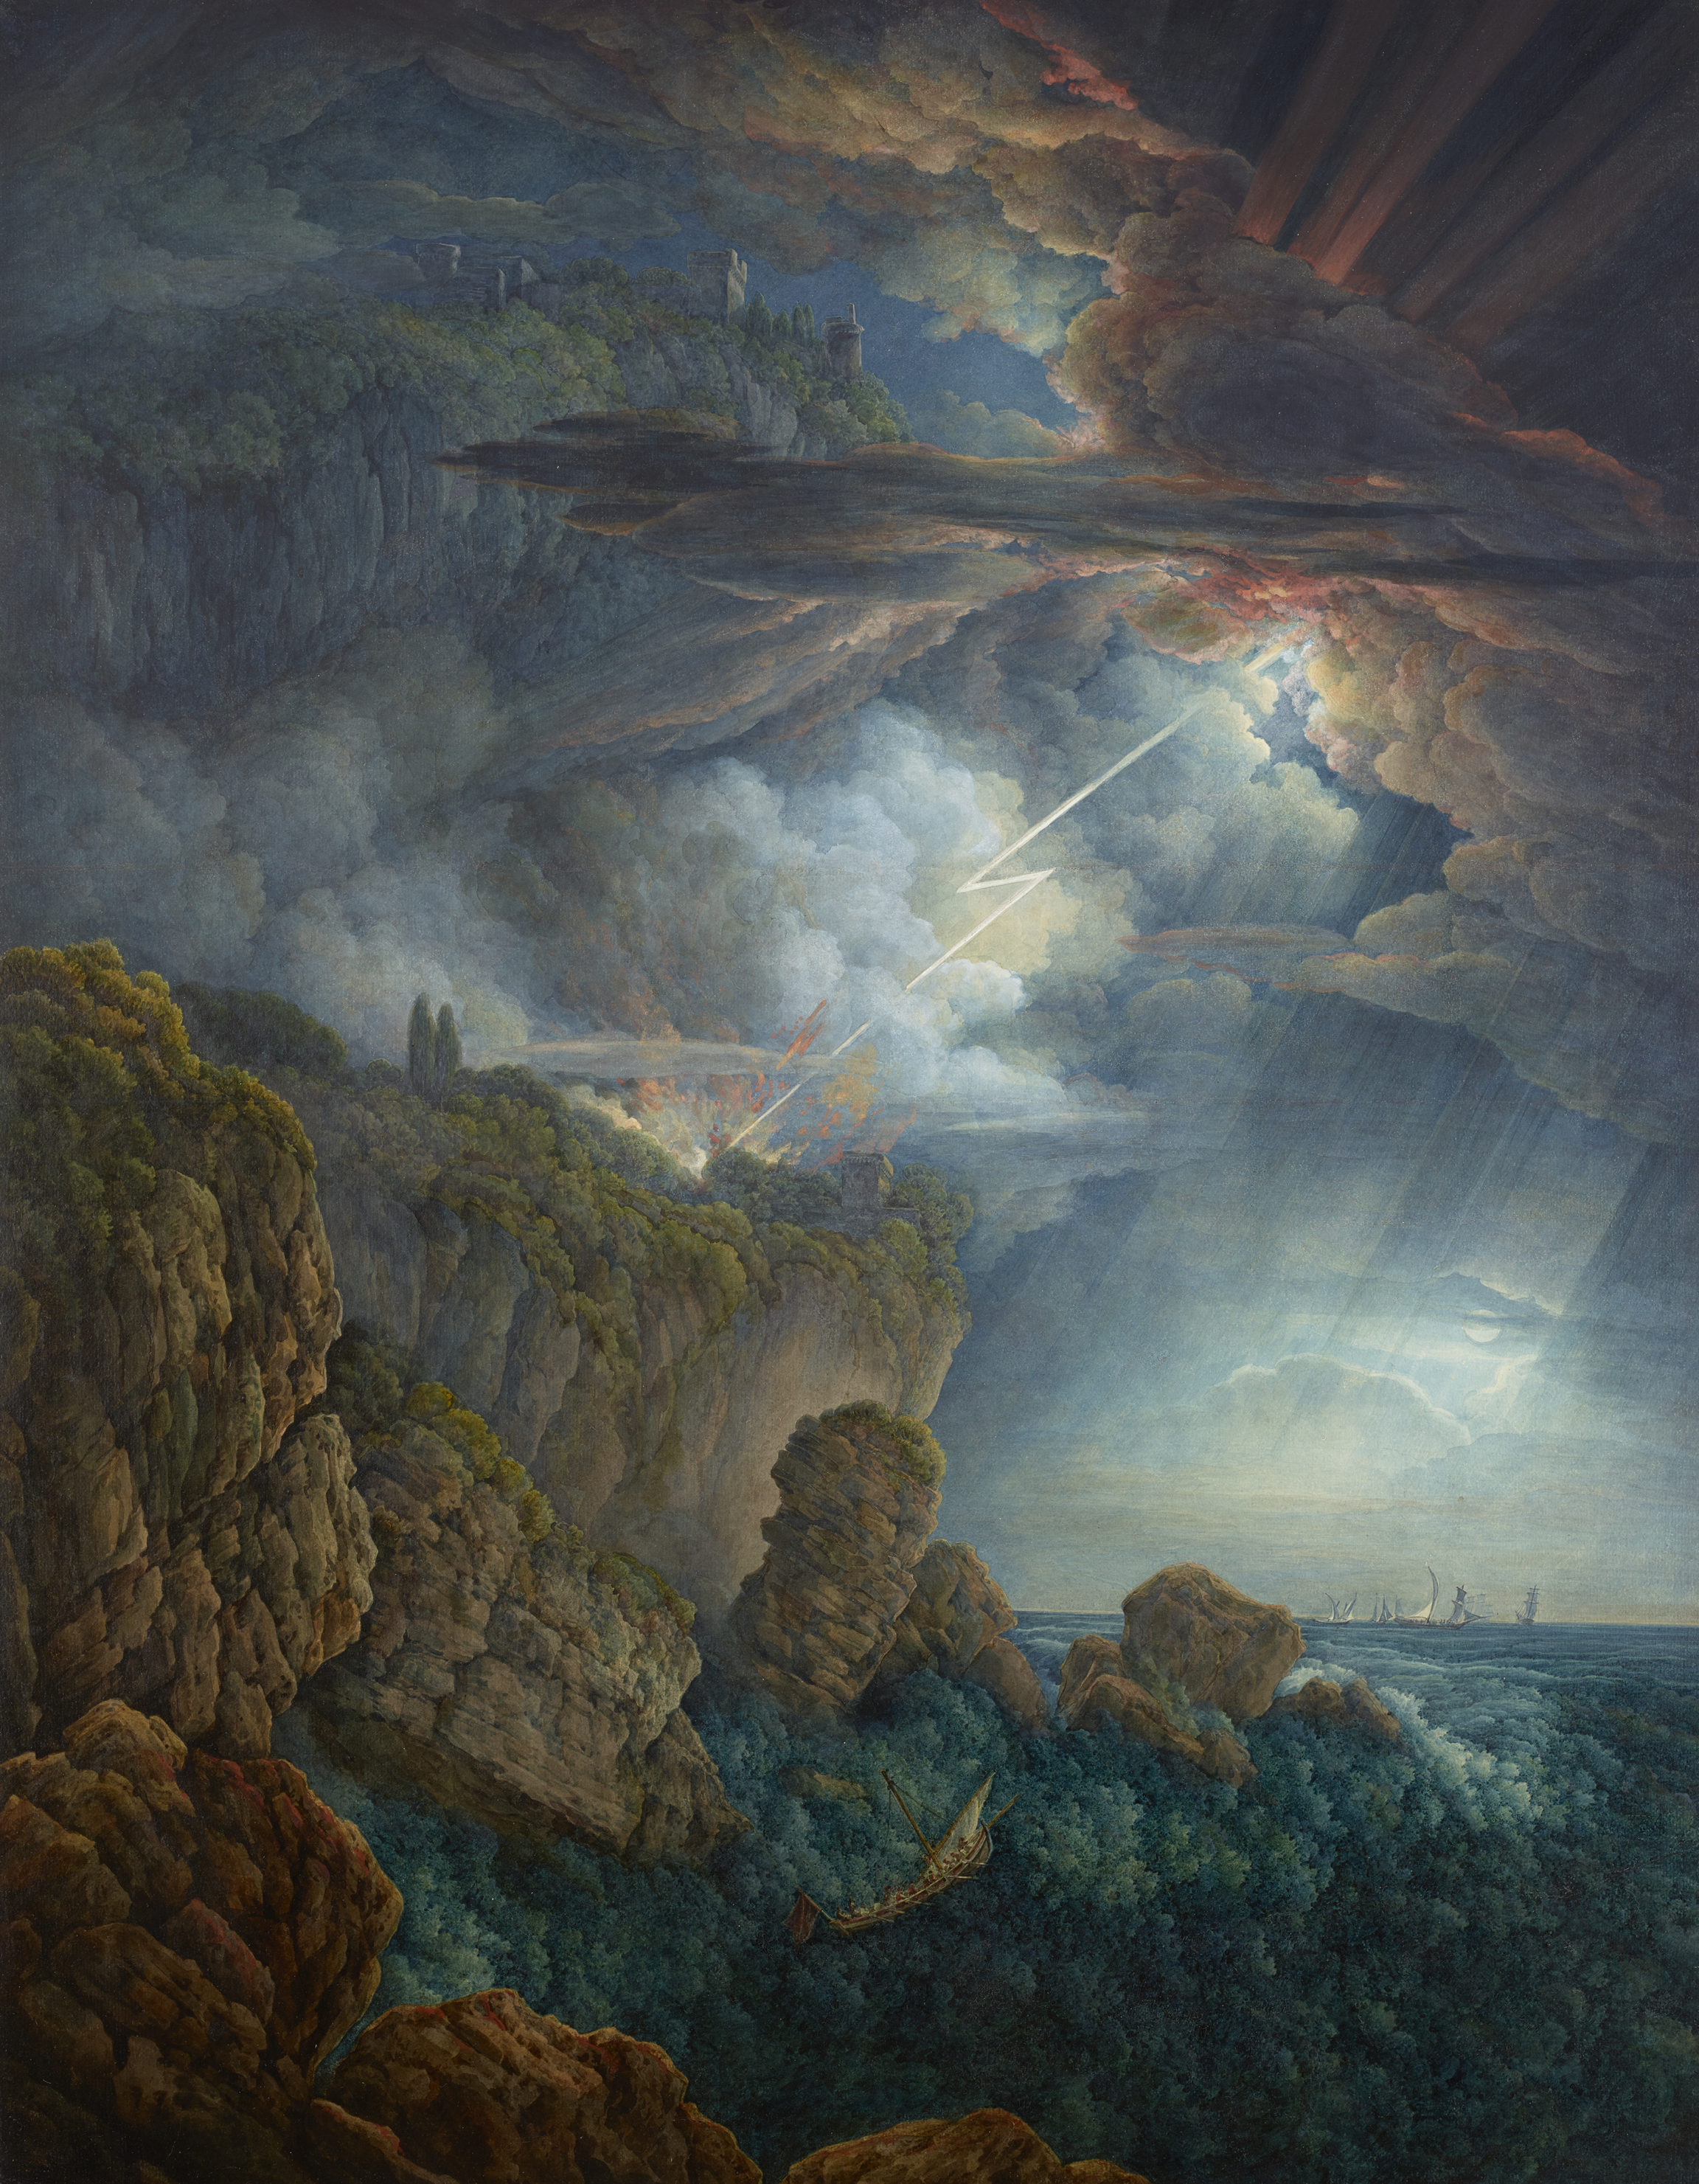 Louis Ducros, Orage nocturne à Cefalù (Night Storm at Cefalù), vers 1800-1805